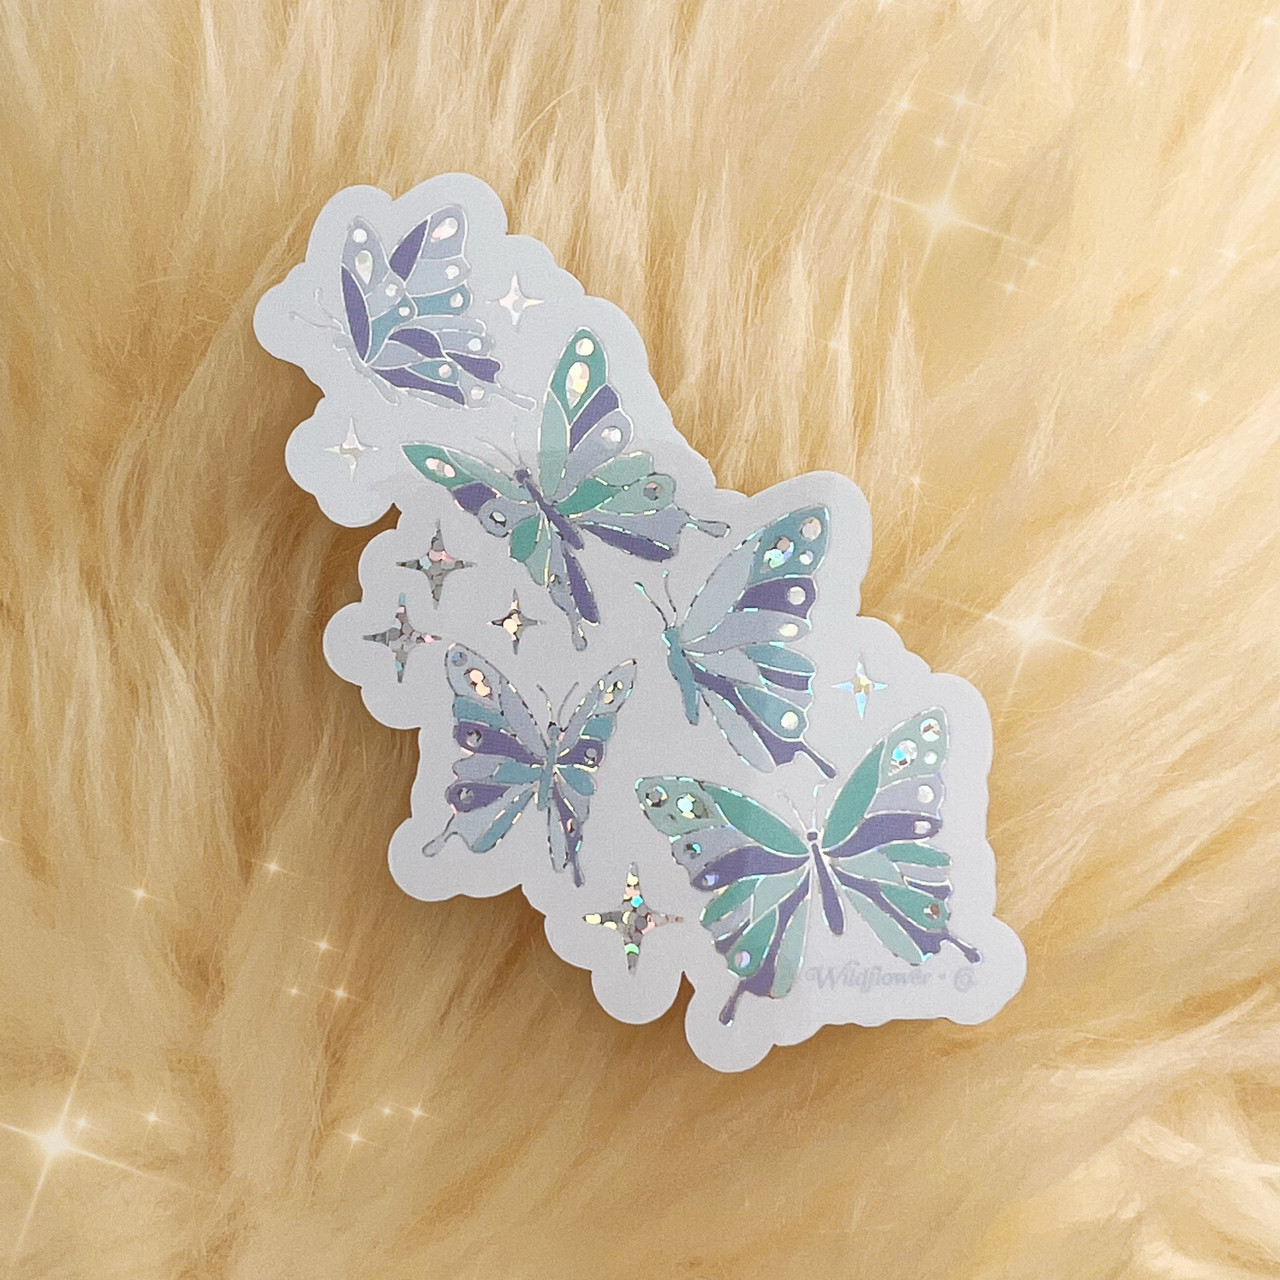 Lunar Butterfly Sticker - Glitter Holographic!